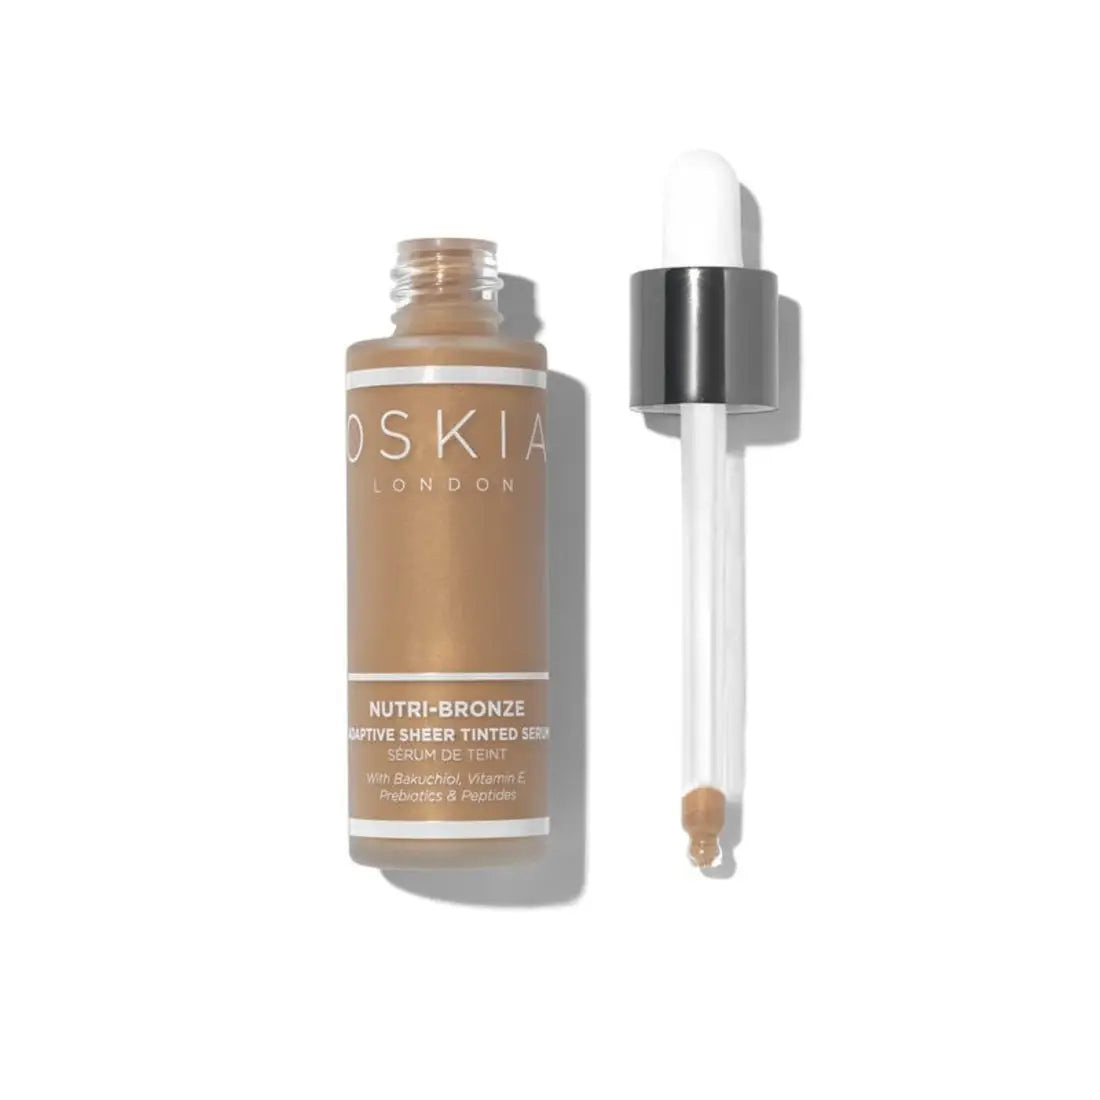 Oskia Skincare Nutri-Bronze Adaptive Sheer Tinted Serum 30ml